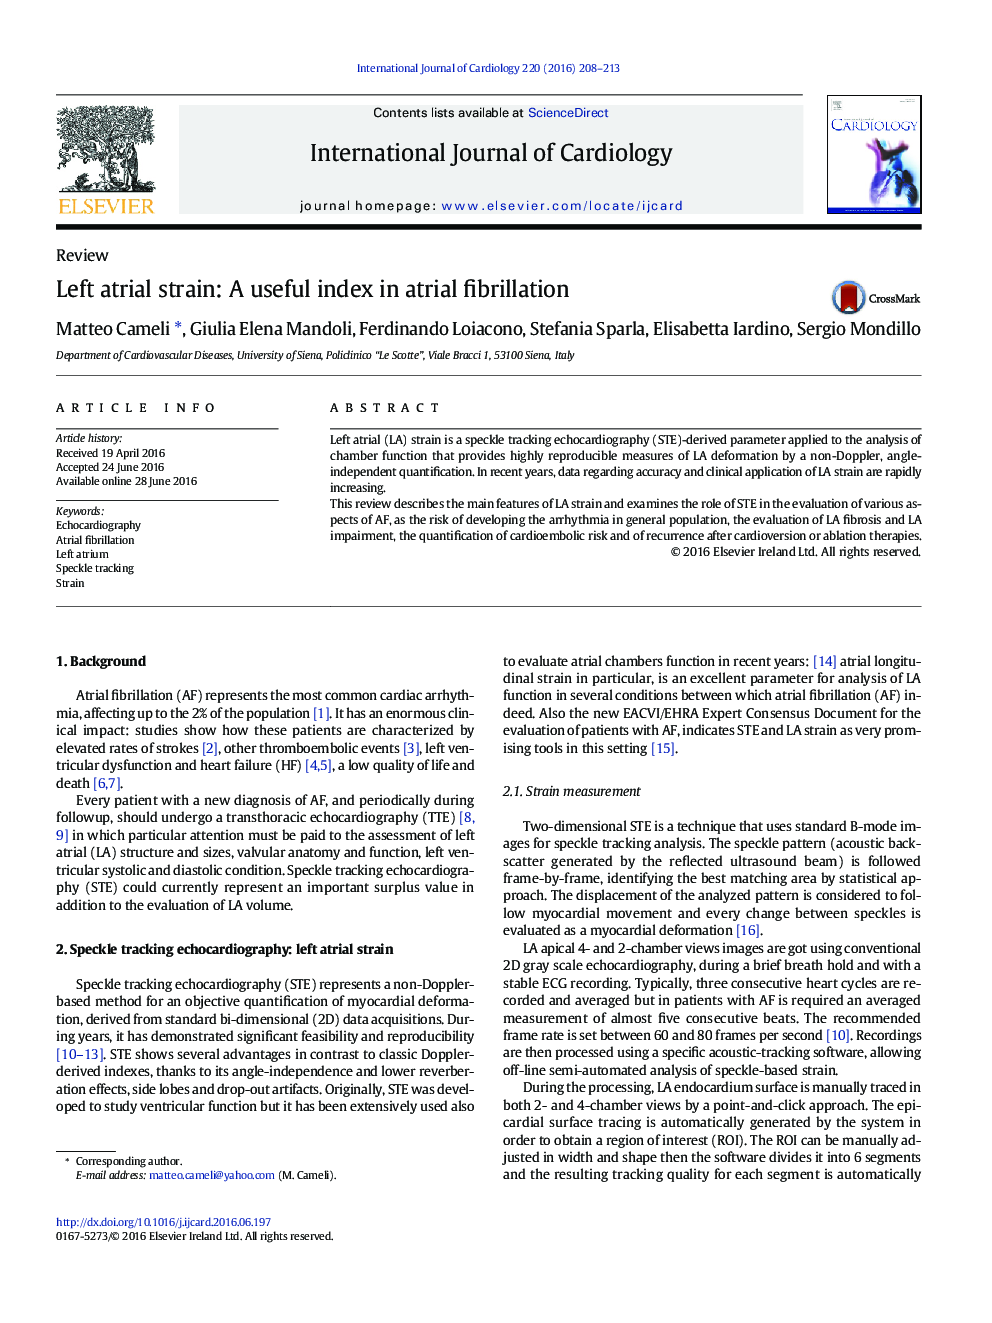 Left atrial strain: A useful index in atrial fibrillation